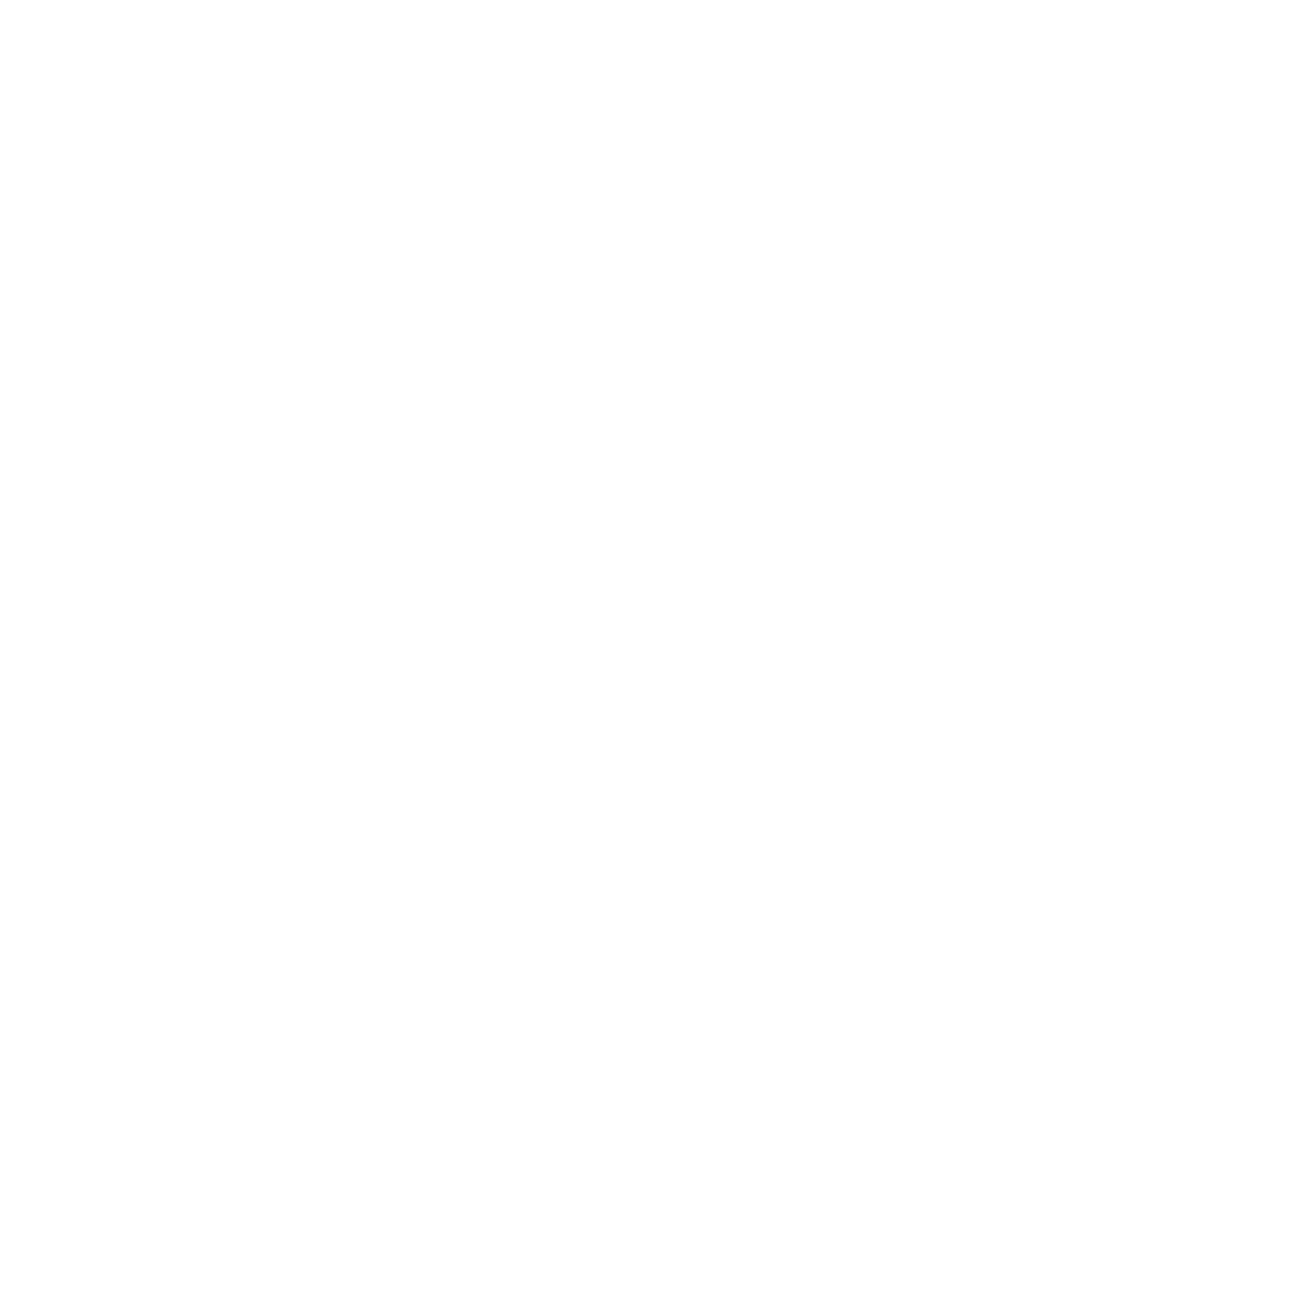 MON-YÉ Vodka